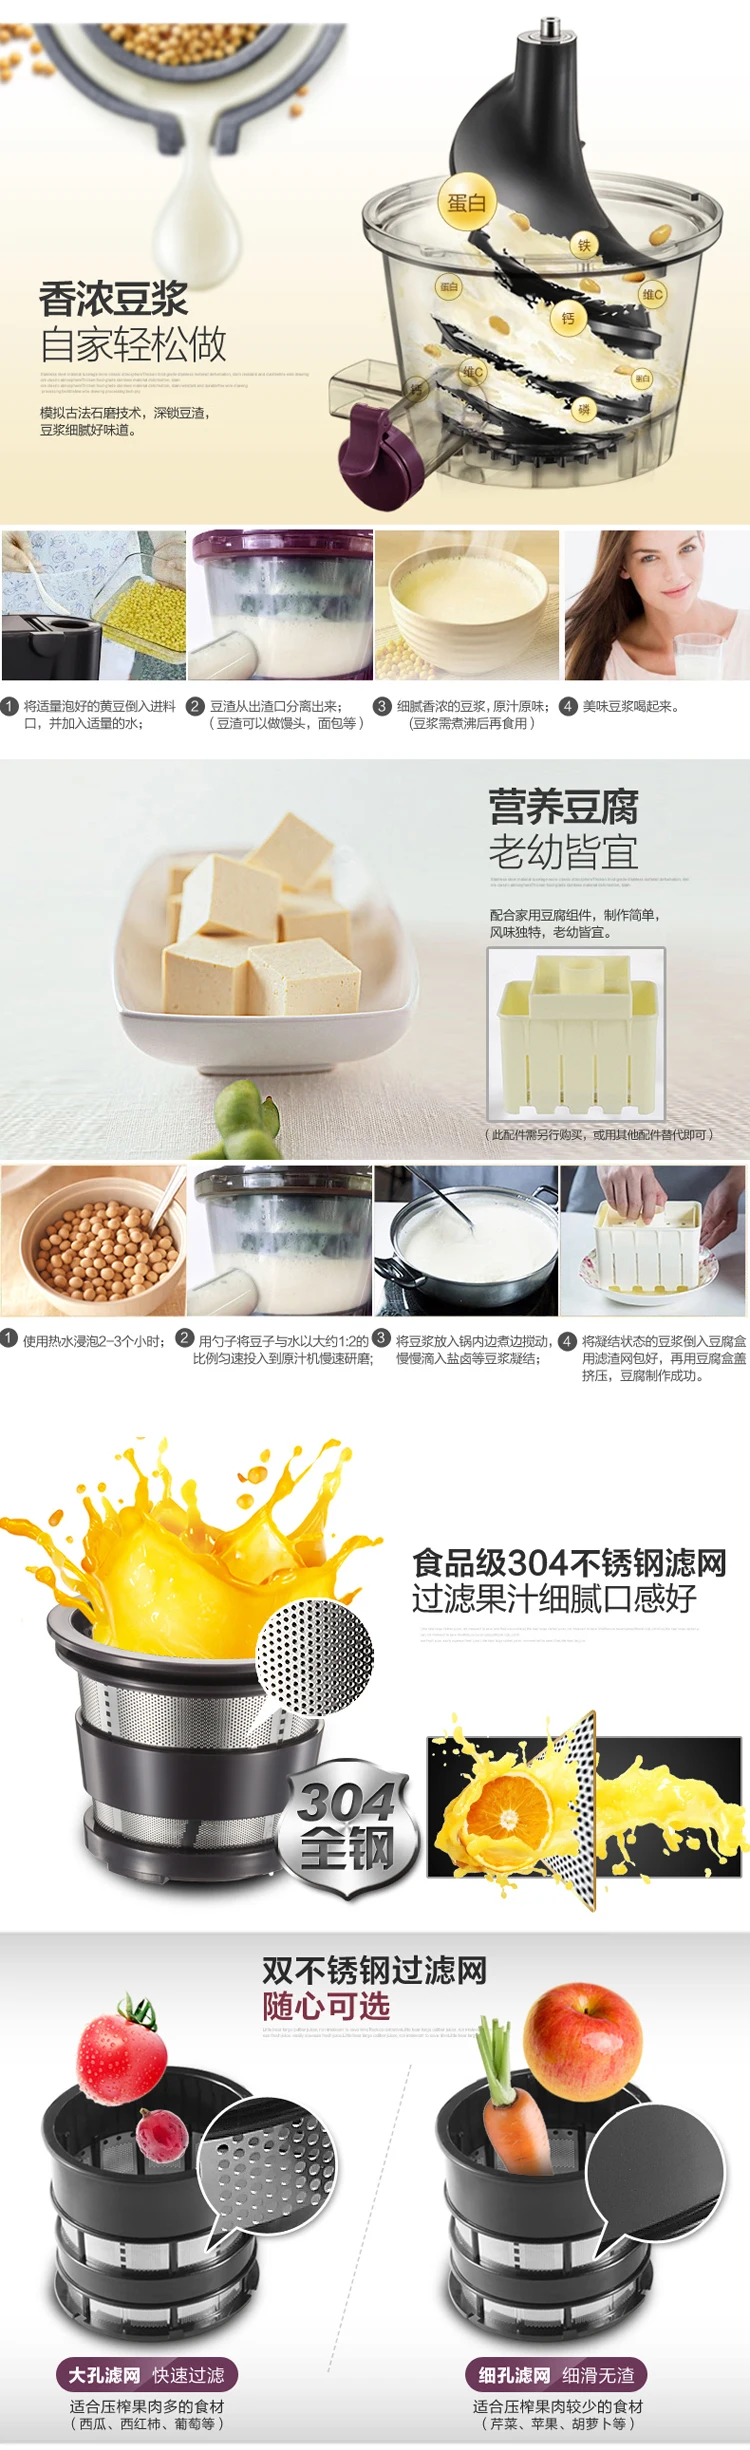 Chinaguangdong медведь YZJ-A02W9 соковыжималка машина медленная соковыжималка фрукты овощи цитрусовые соевое молоко тофу